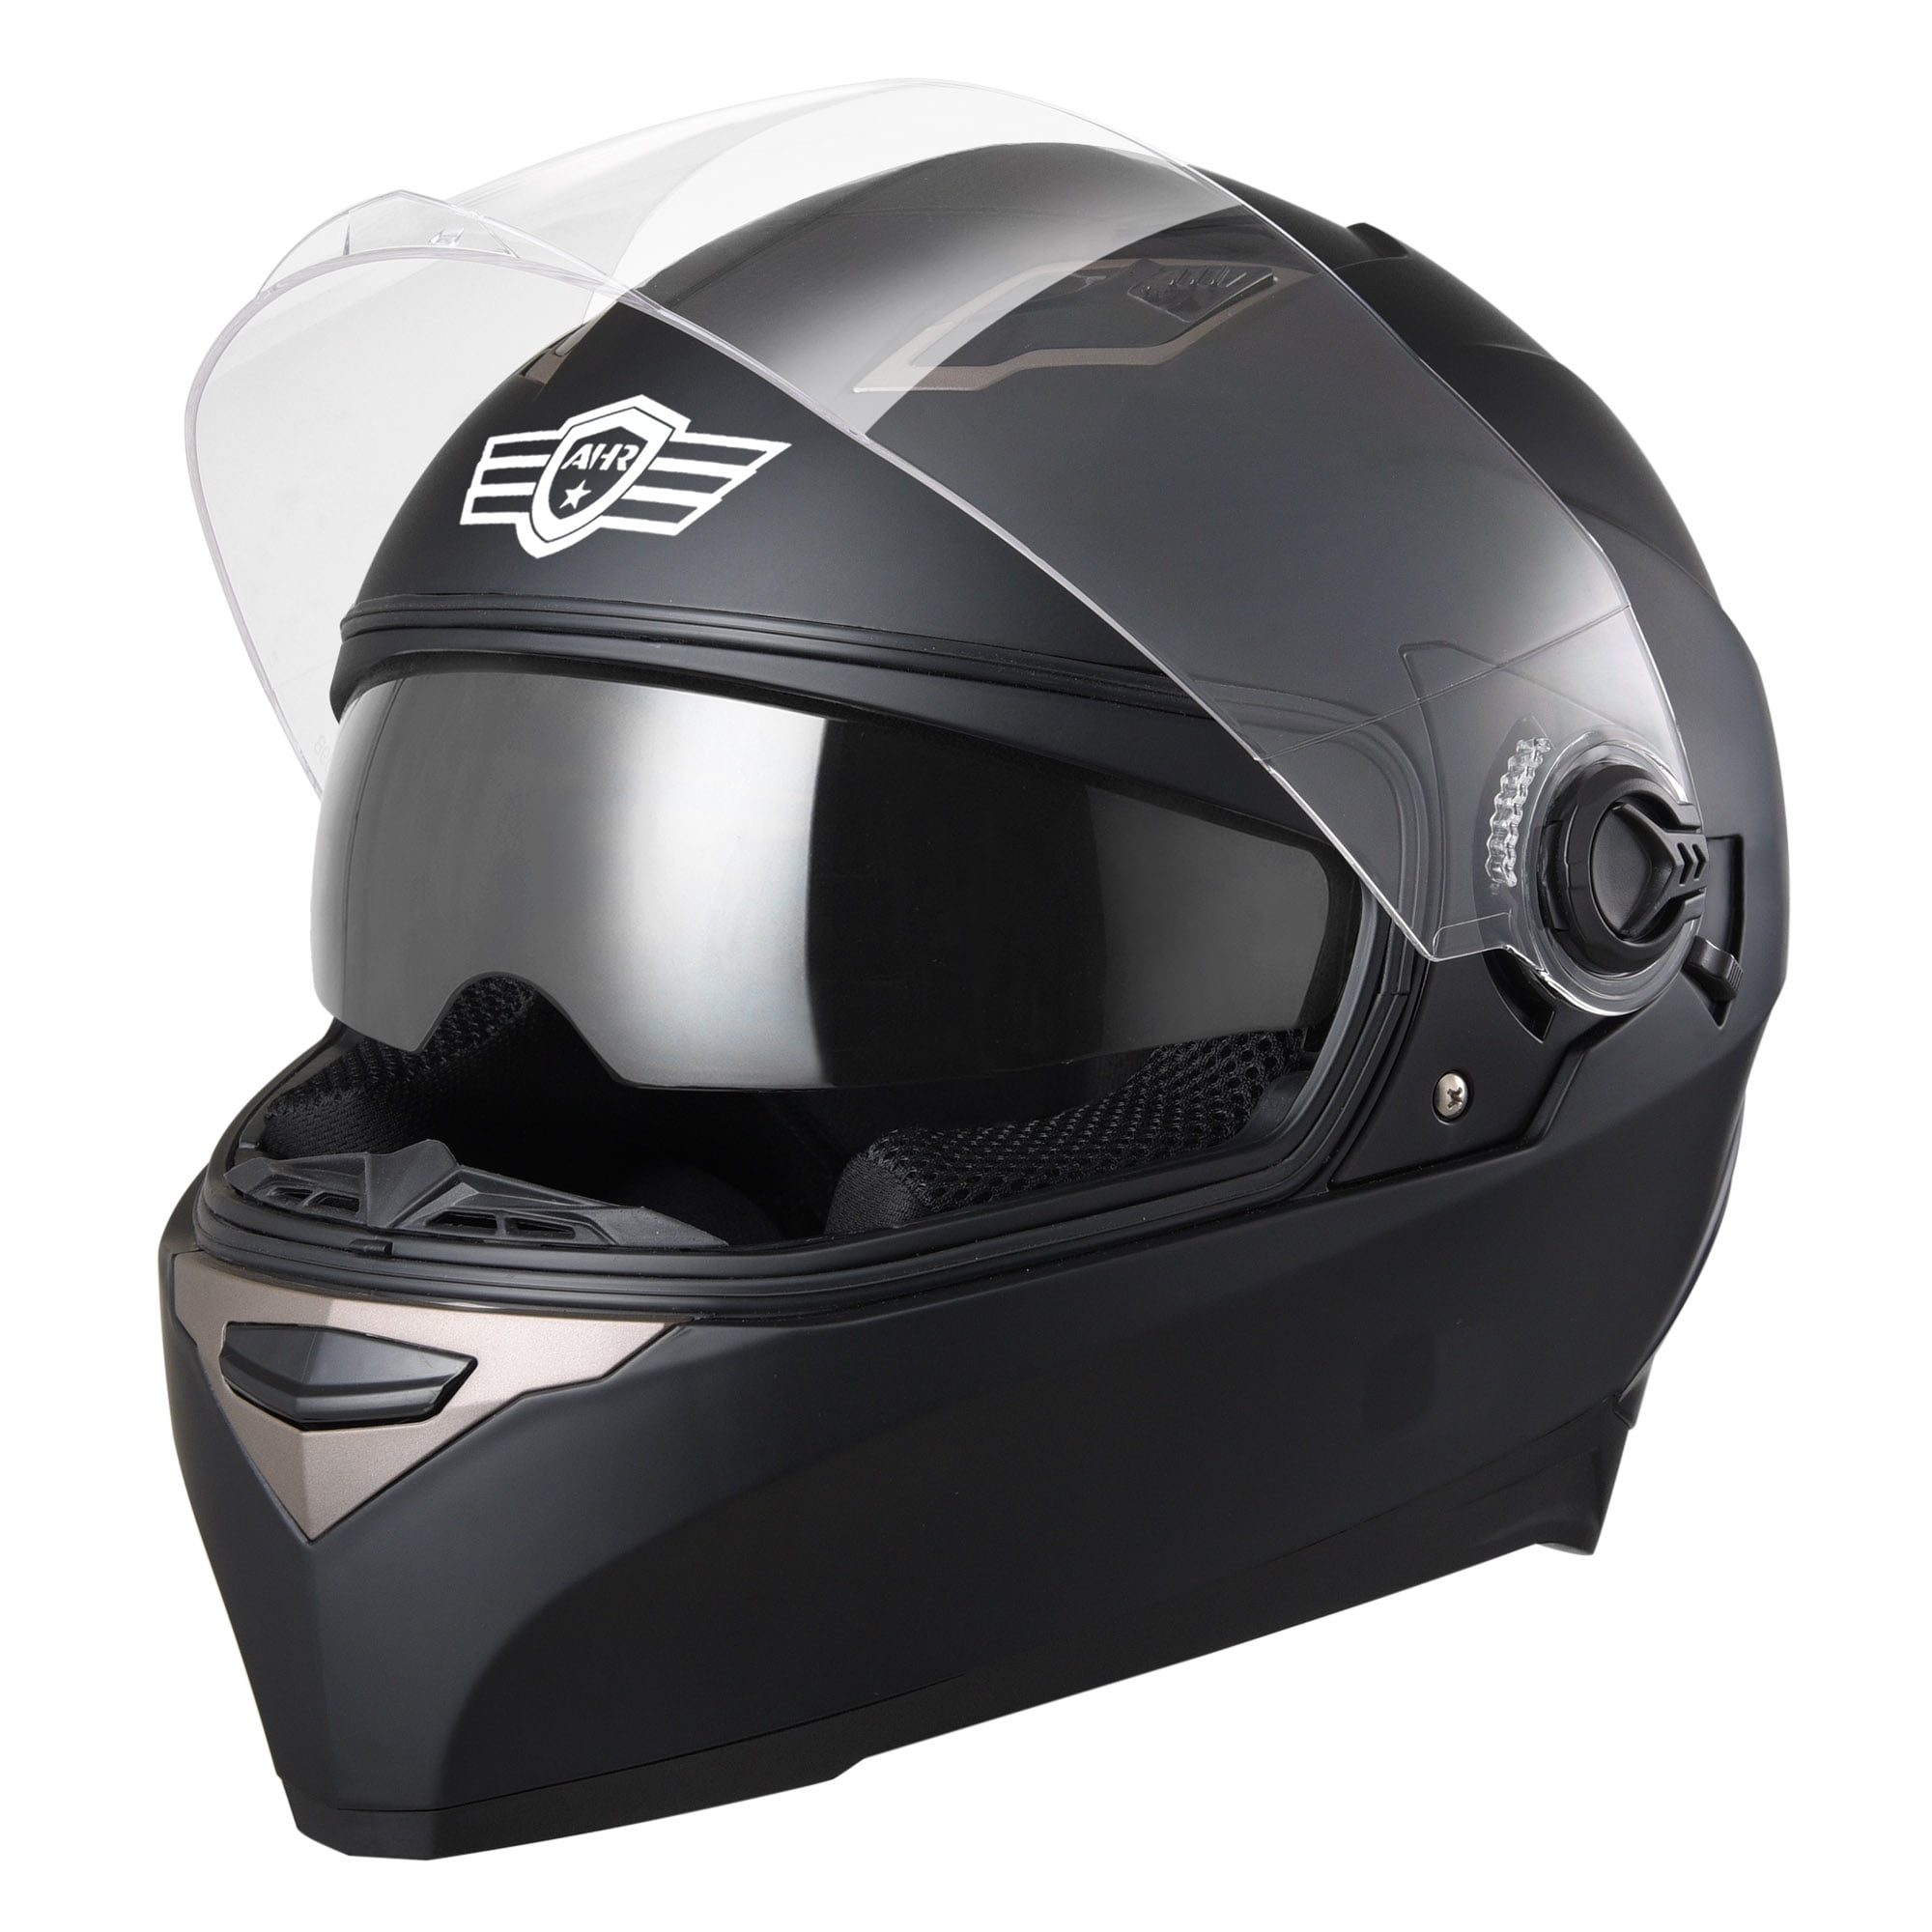 Unisex-Adult Lightweight Full Face Motorcycle Street Bike Helmet with Visor Sun 